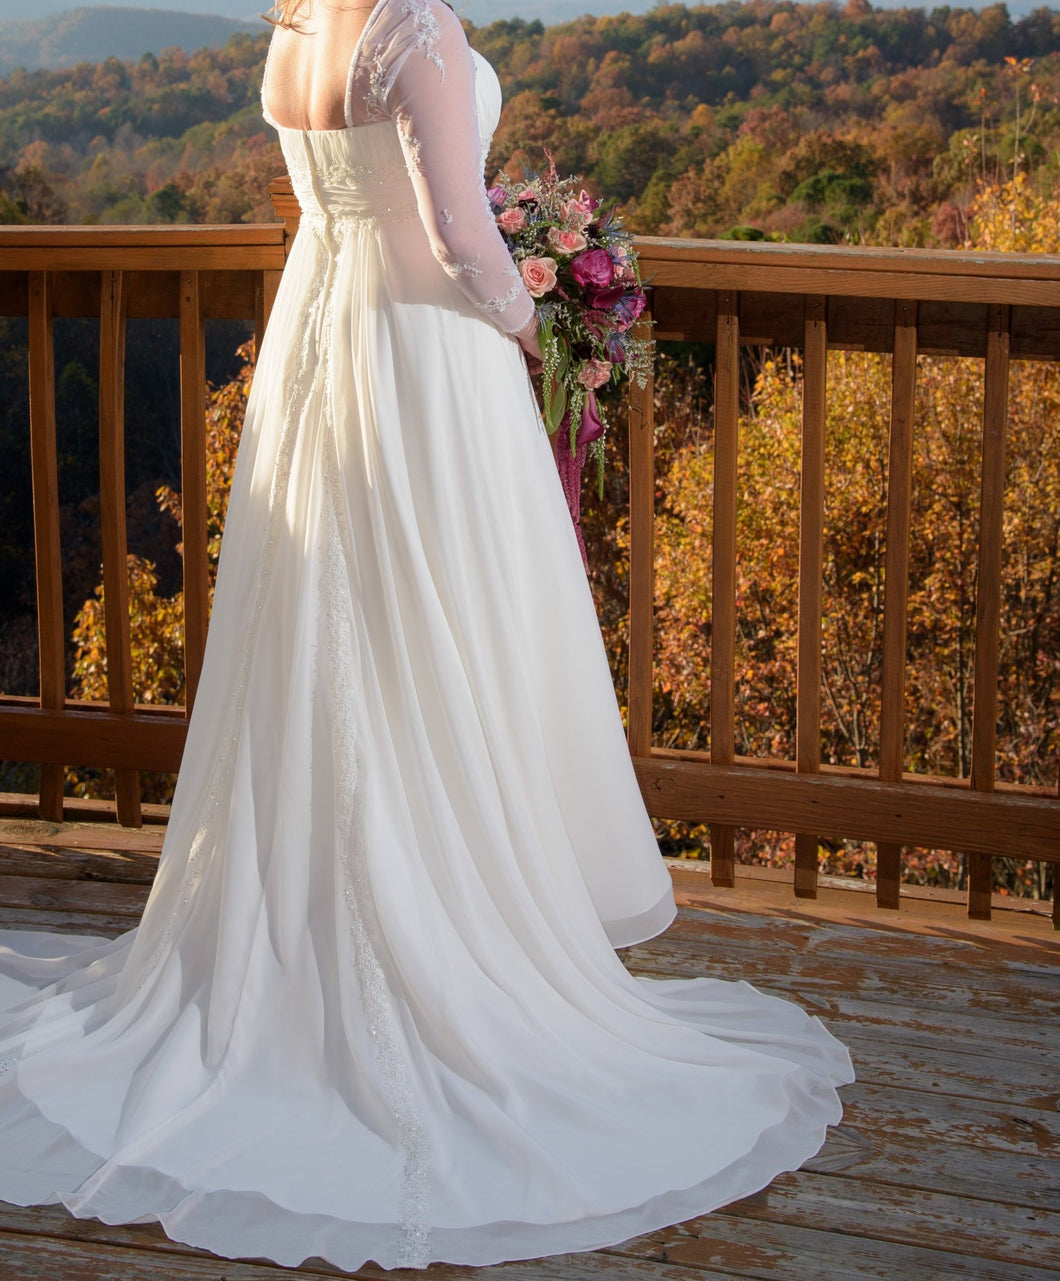 David's Bridal 'Soft Chiffon' size 14 used wedding dress side view on bride